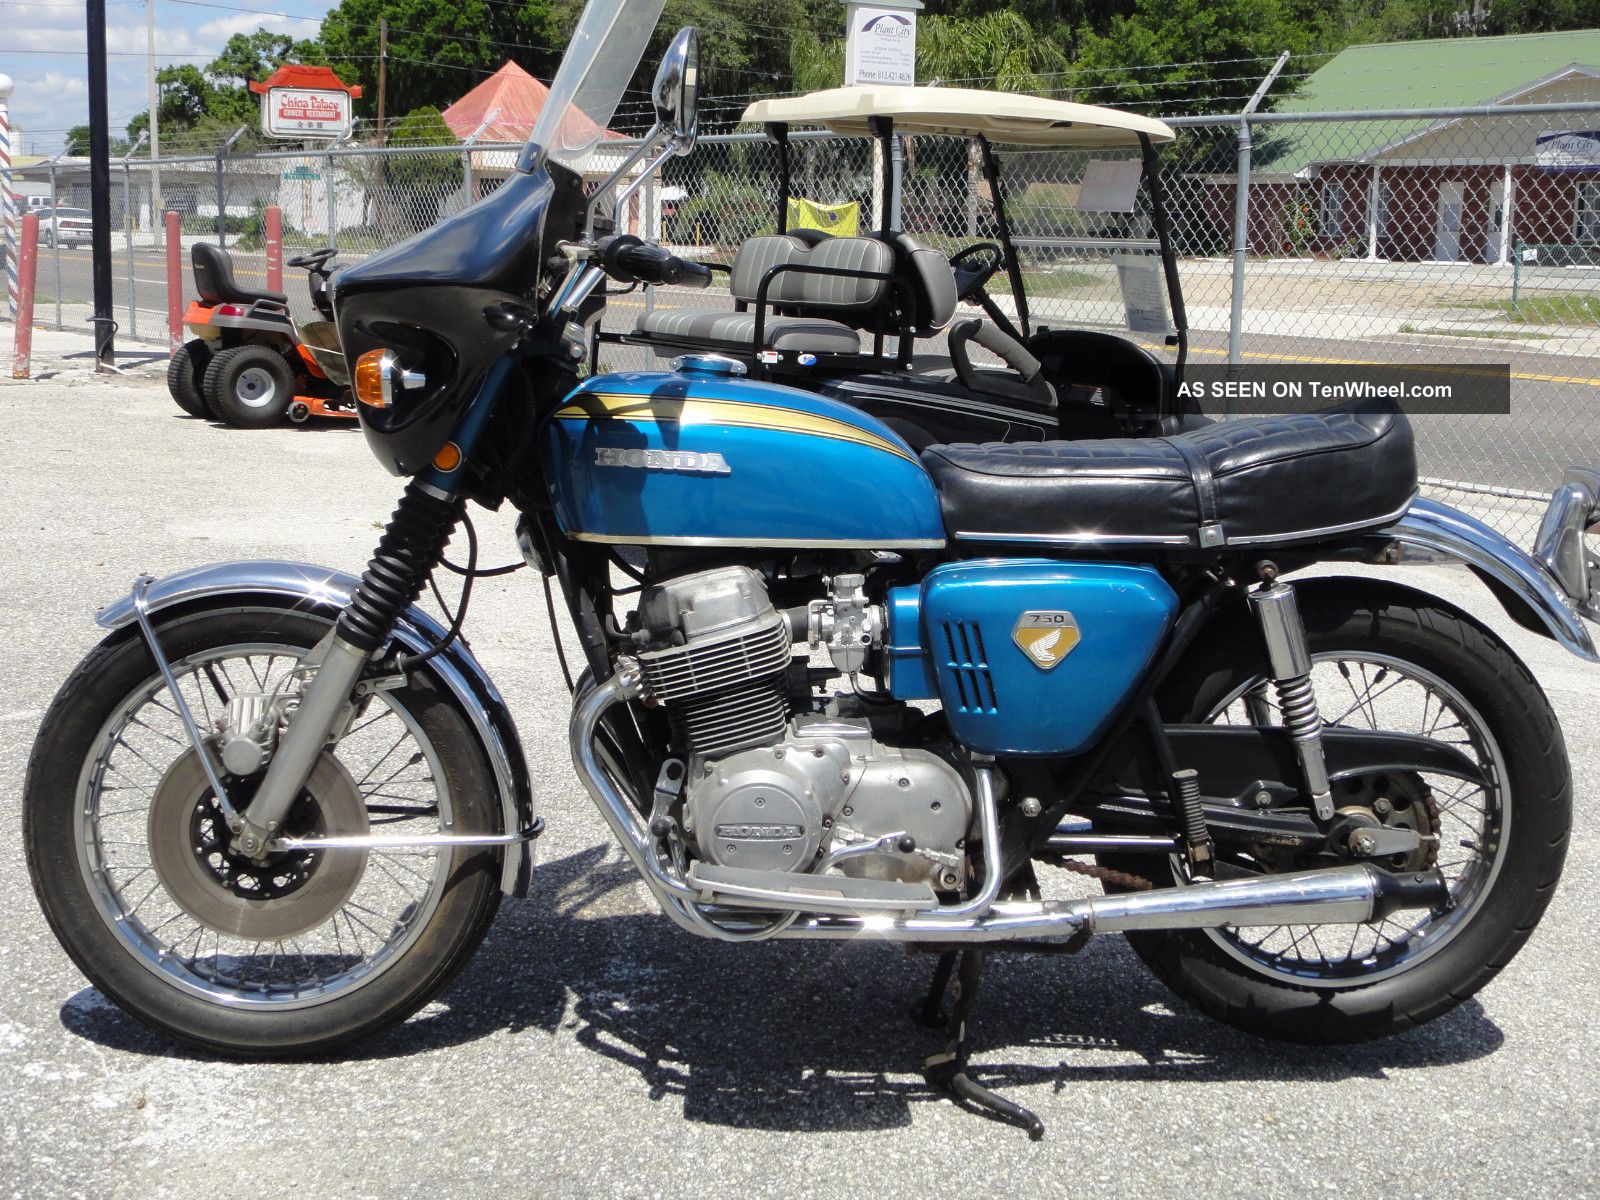 1970S honda motorcycles